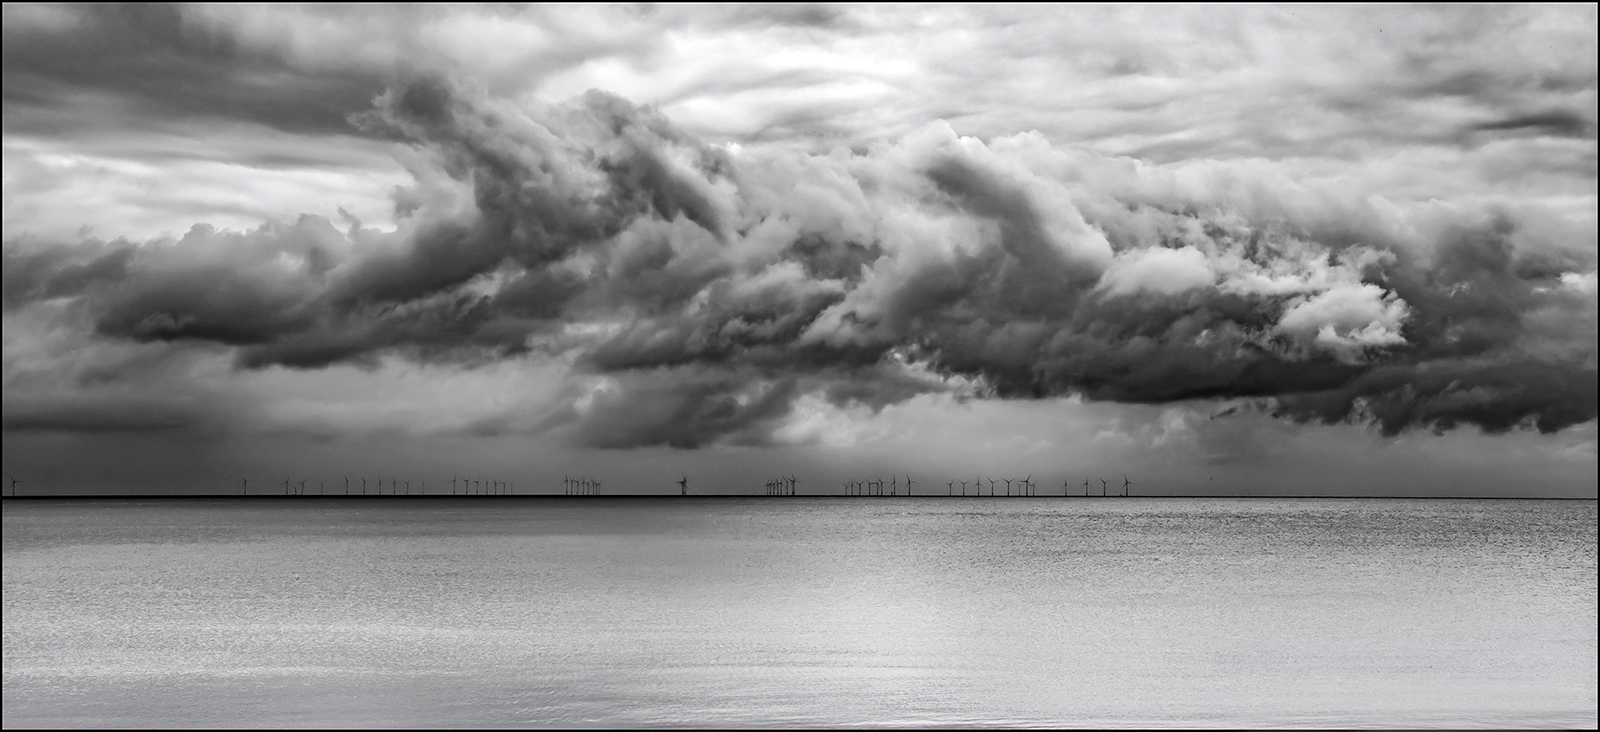 Turbines-Beneath-The-Stormy-Sky-by-Sheila-Orford-9.5-Advanced